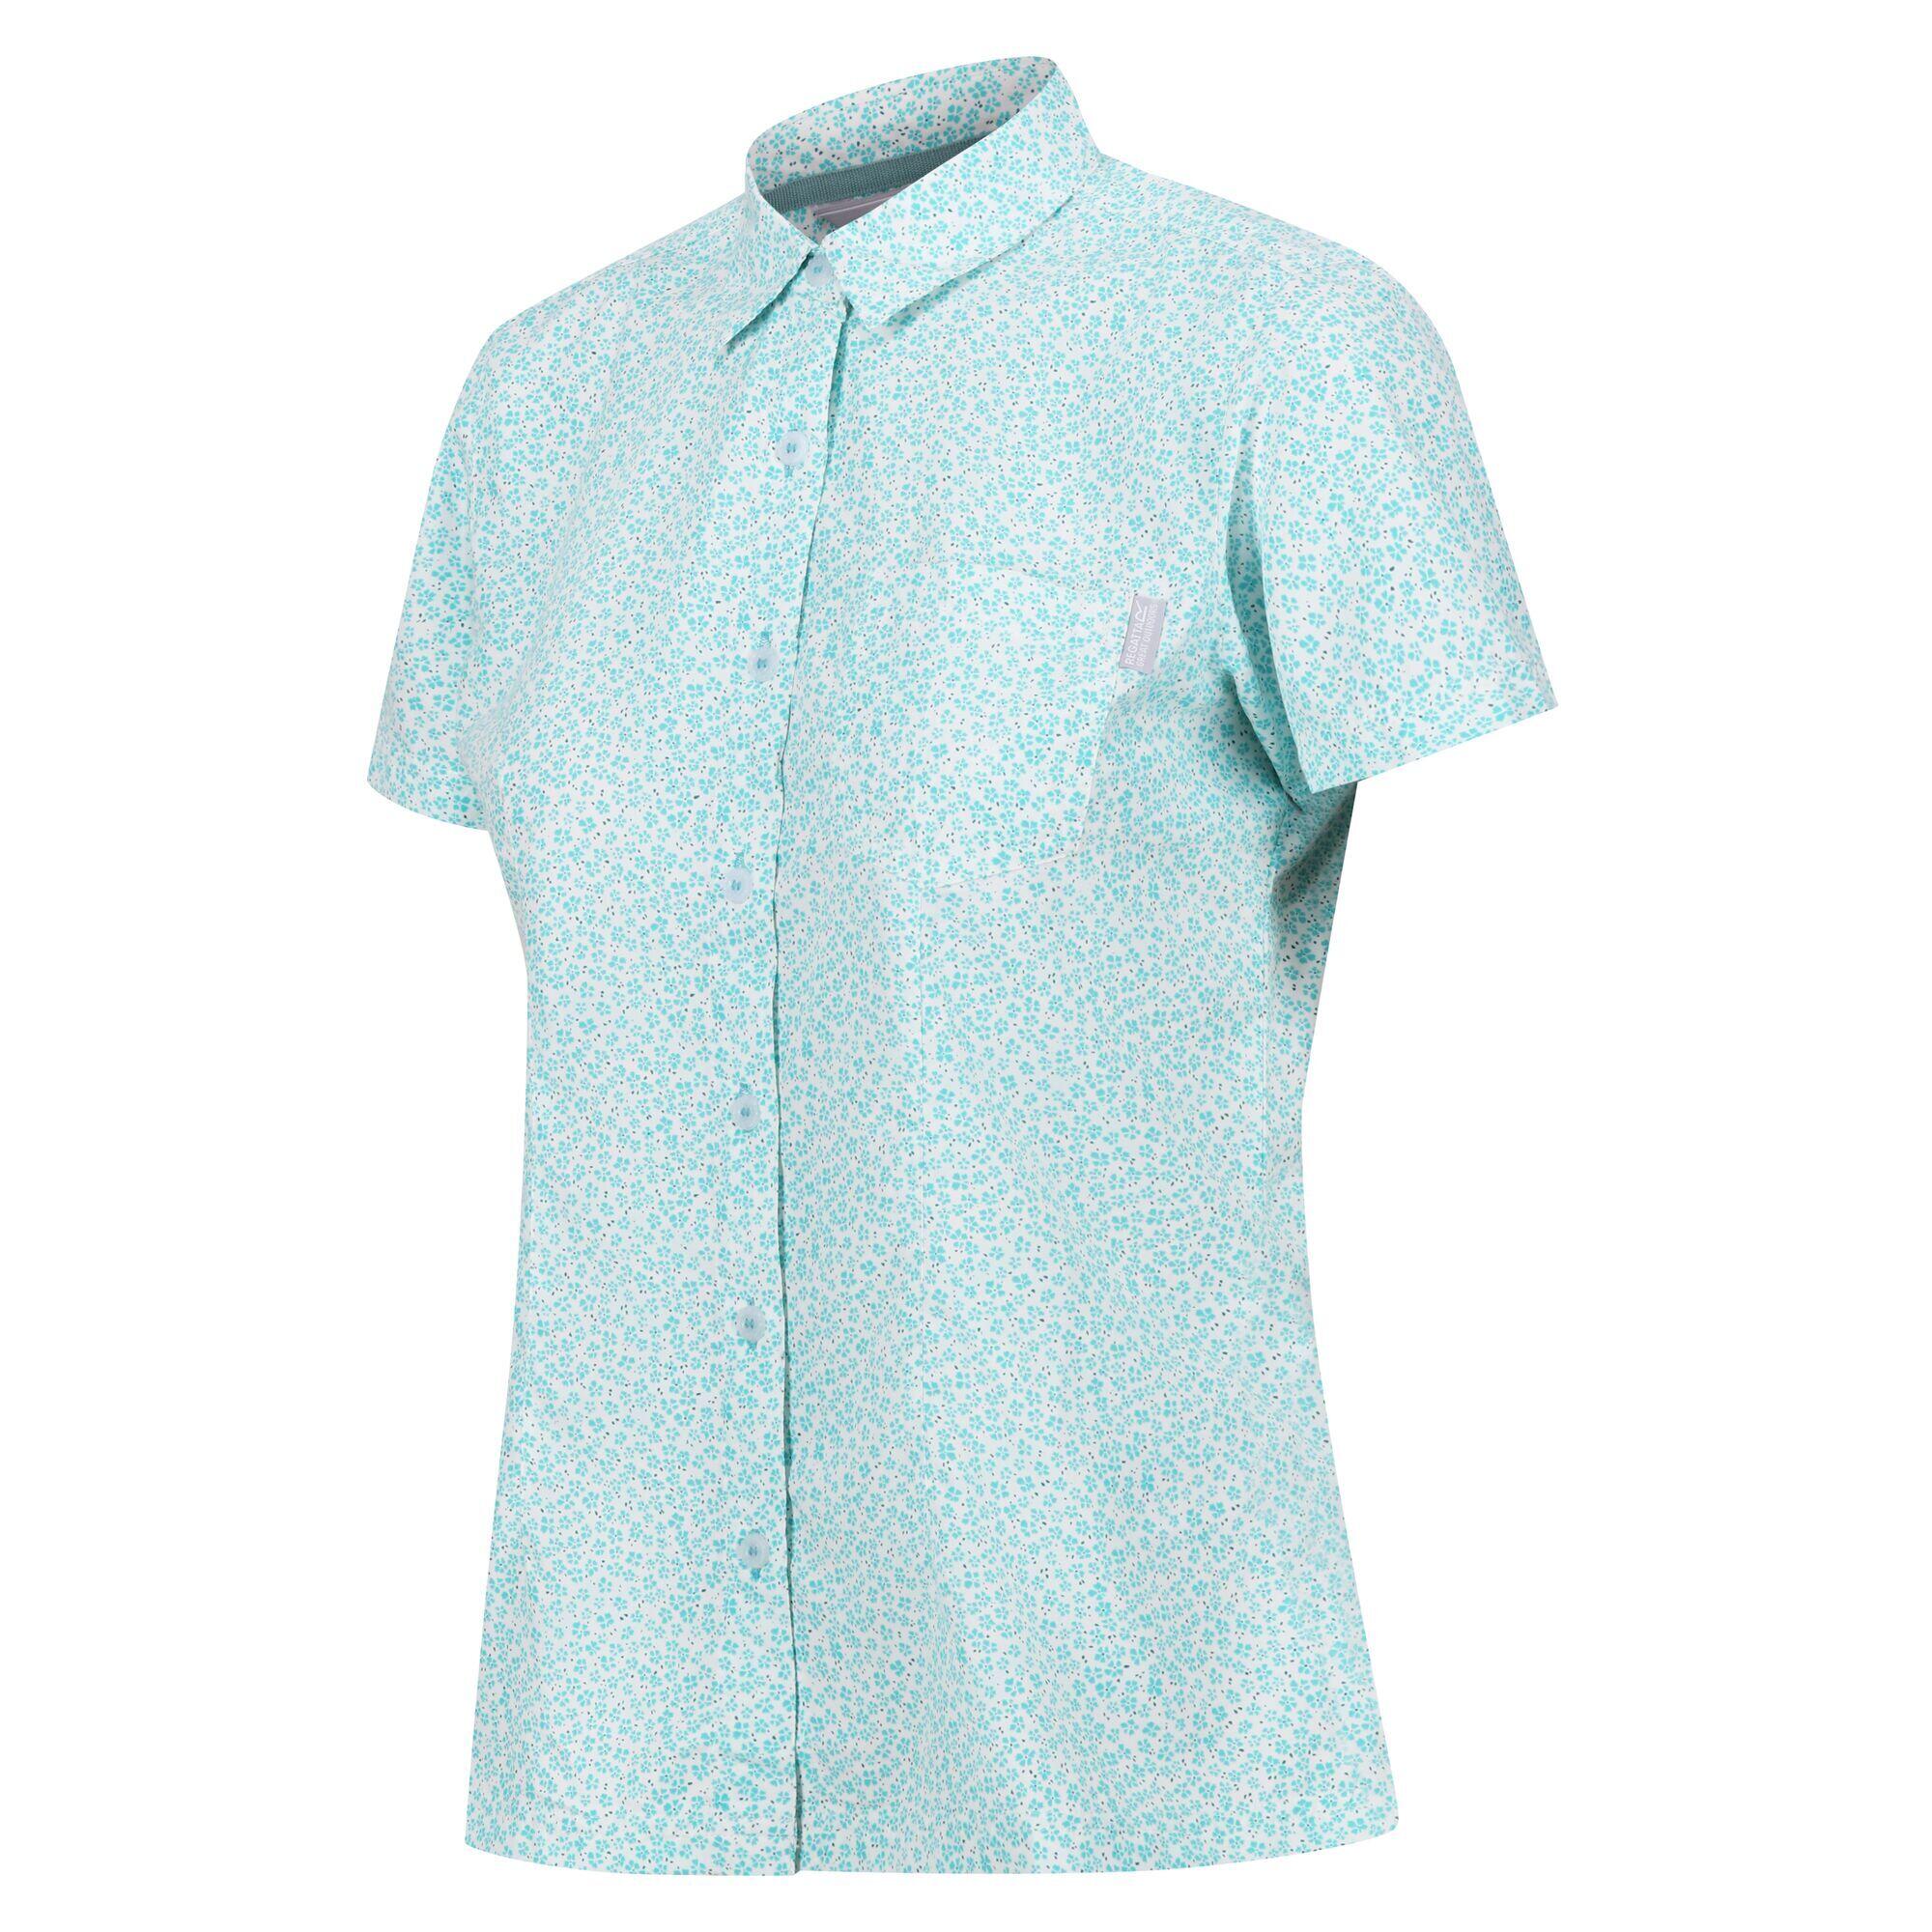 Mindano VII Women's Walking Short Sleeve Shirt 6/7